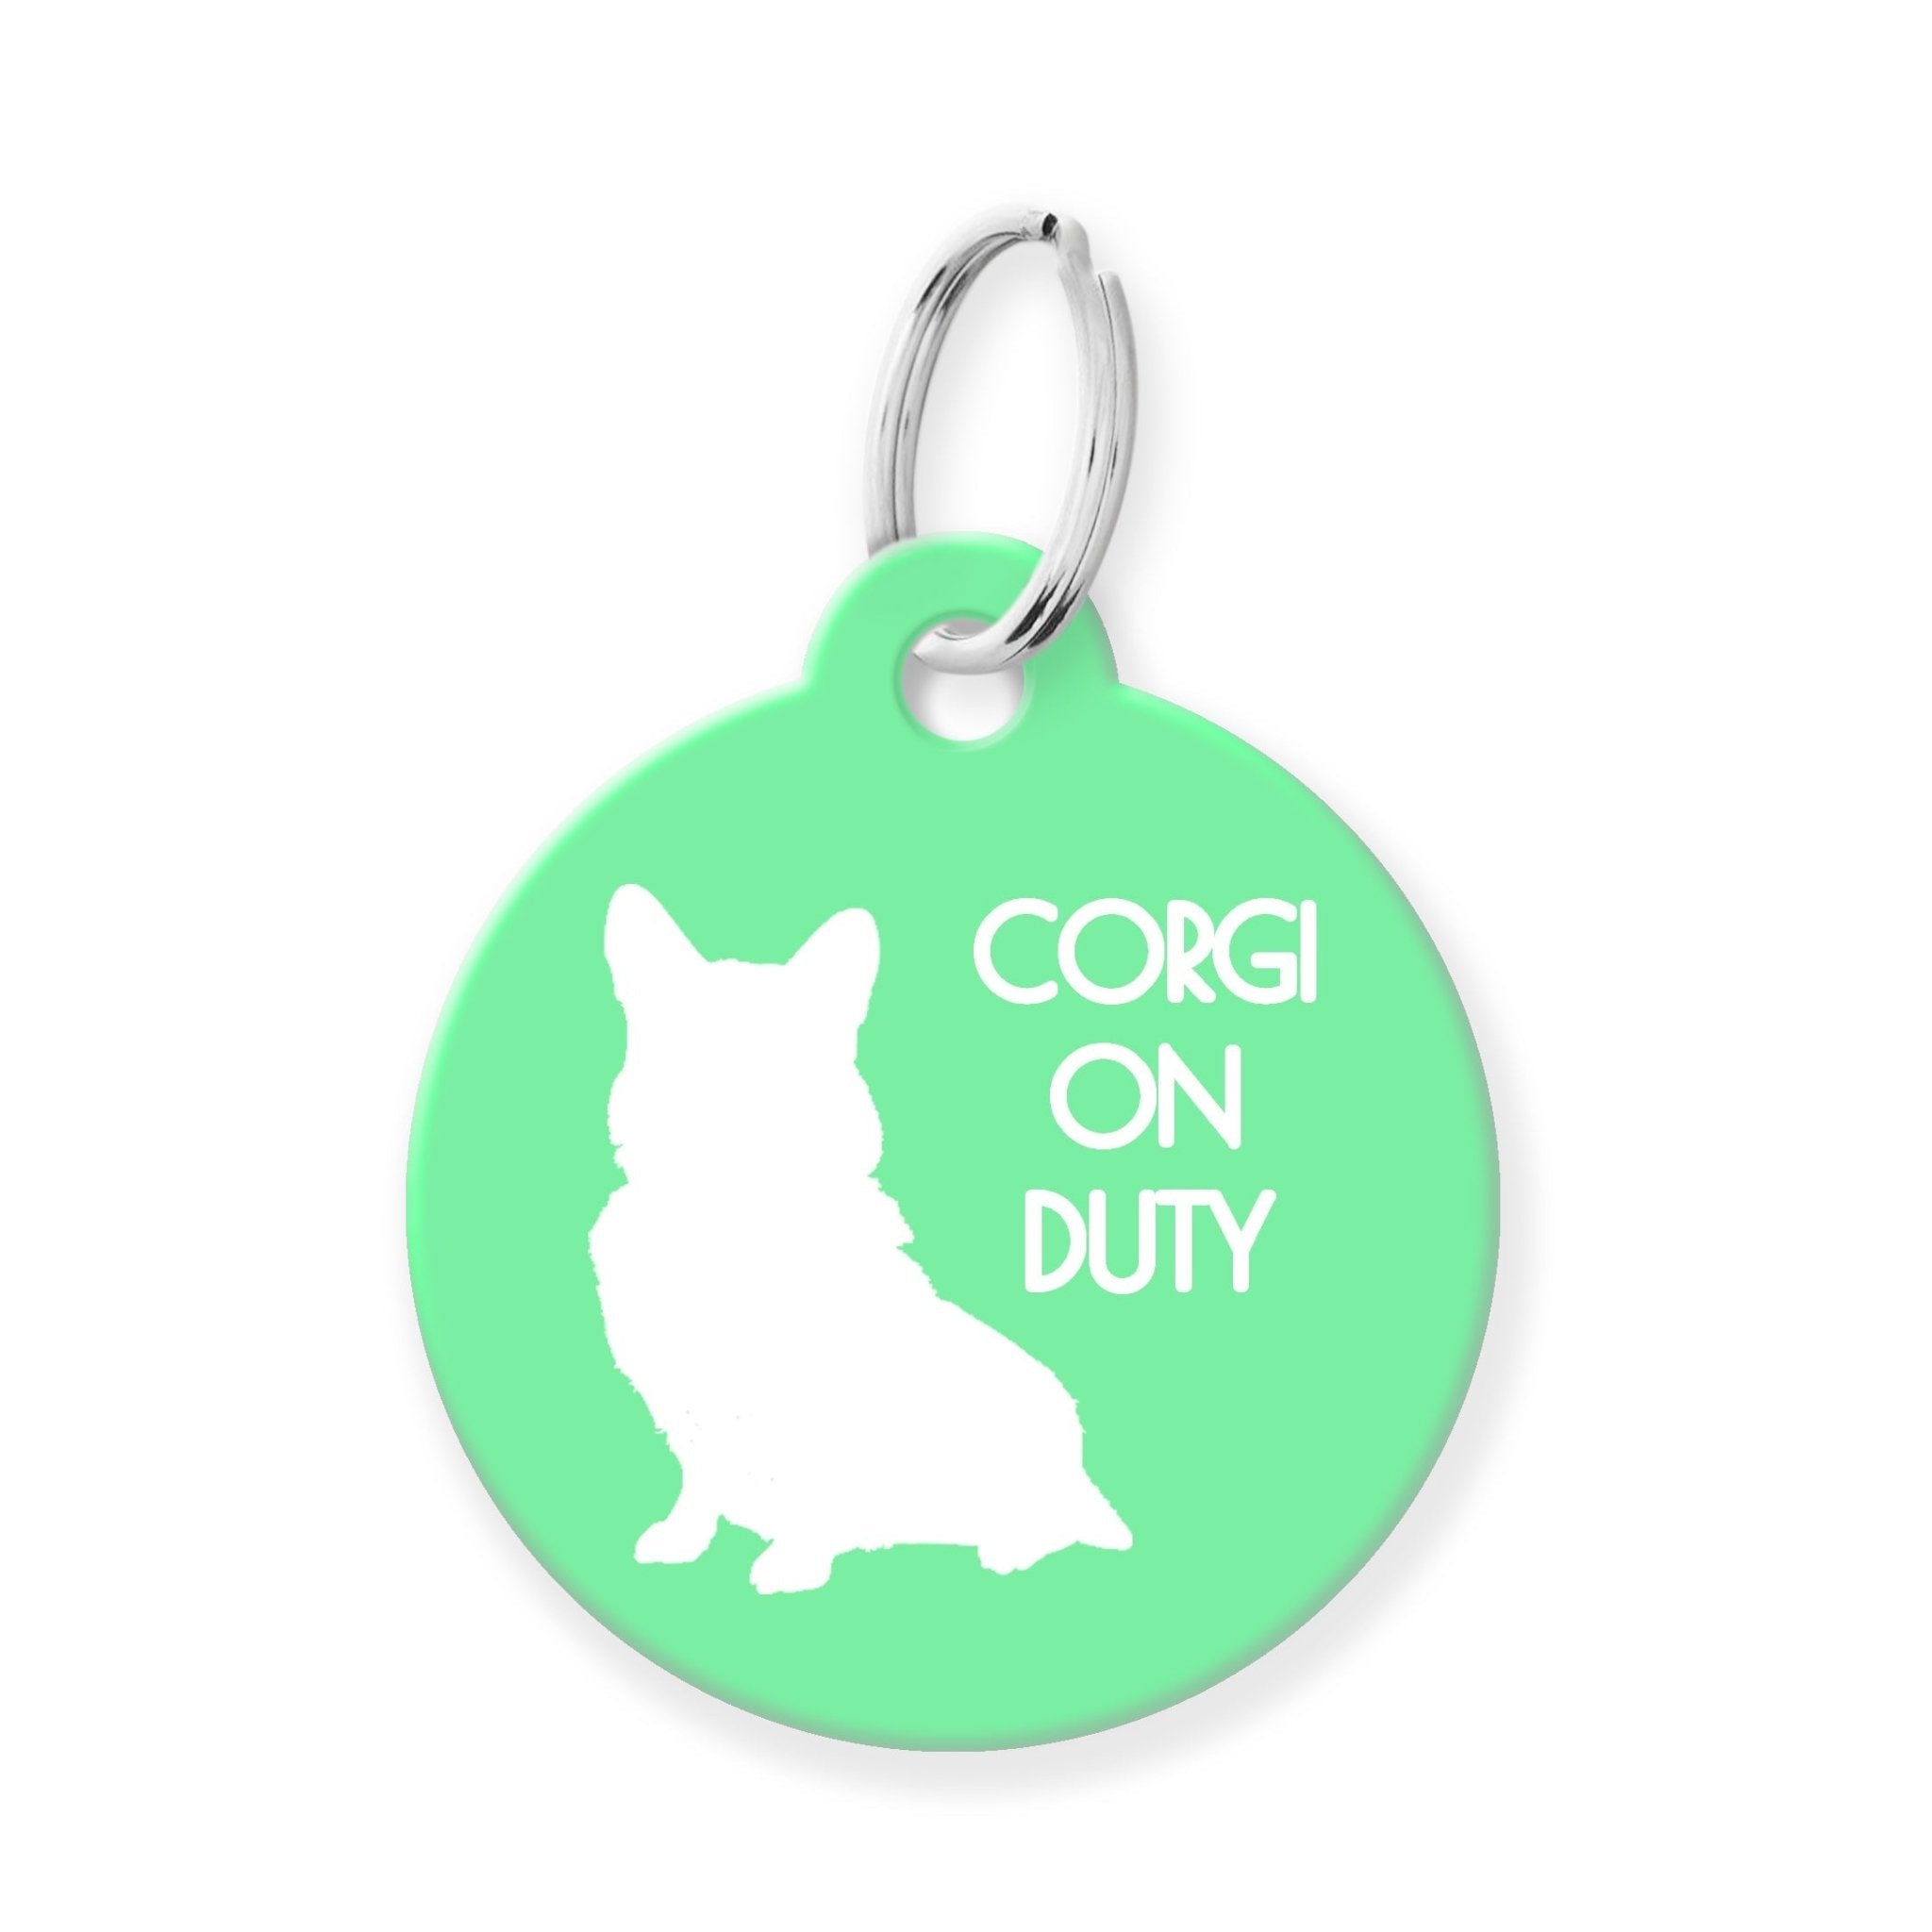 Corgi on Duty Funny Pet Tag - The Barking Mutt